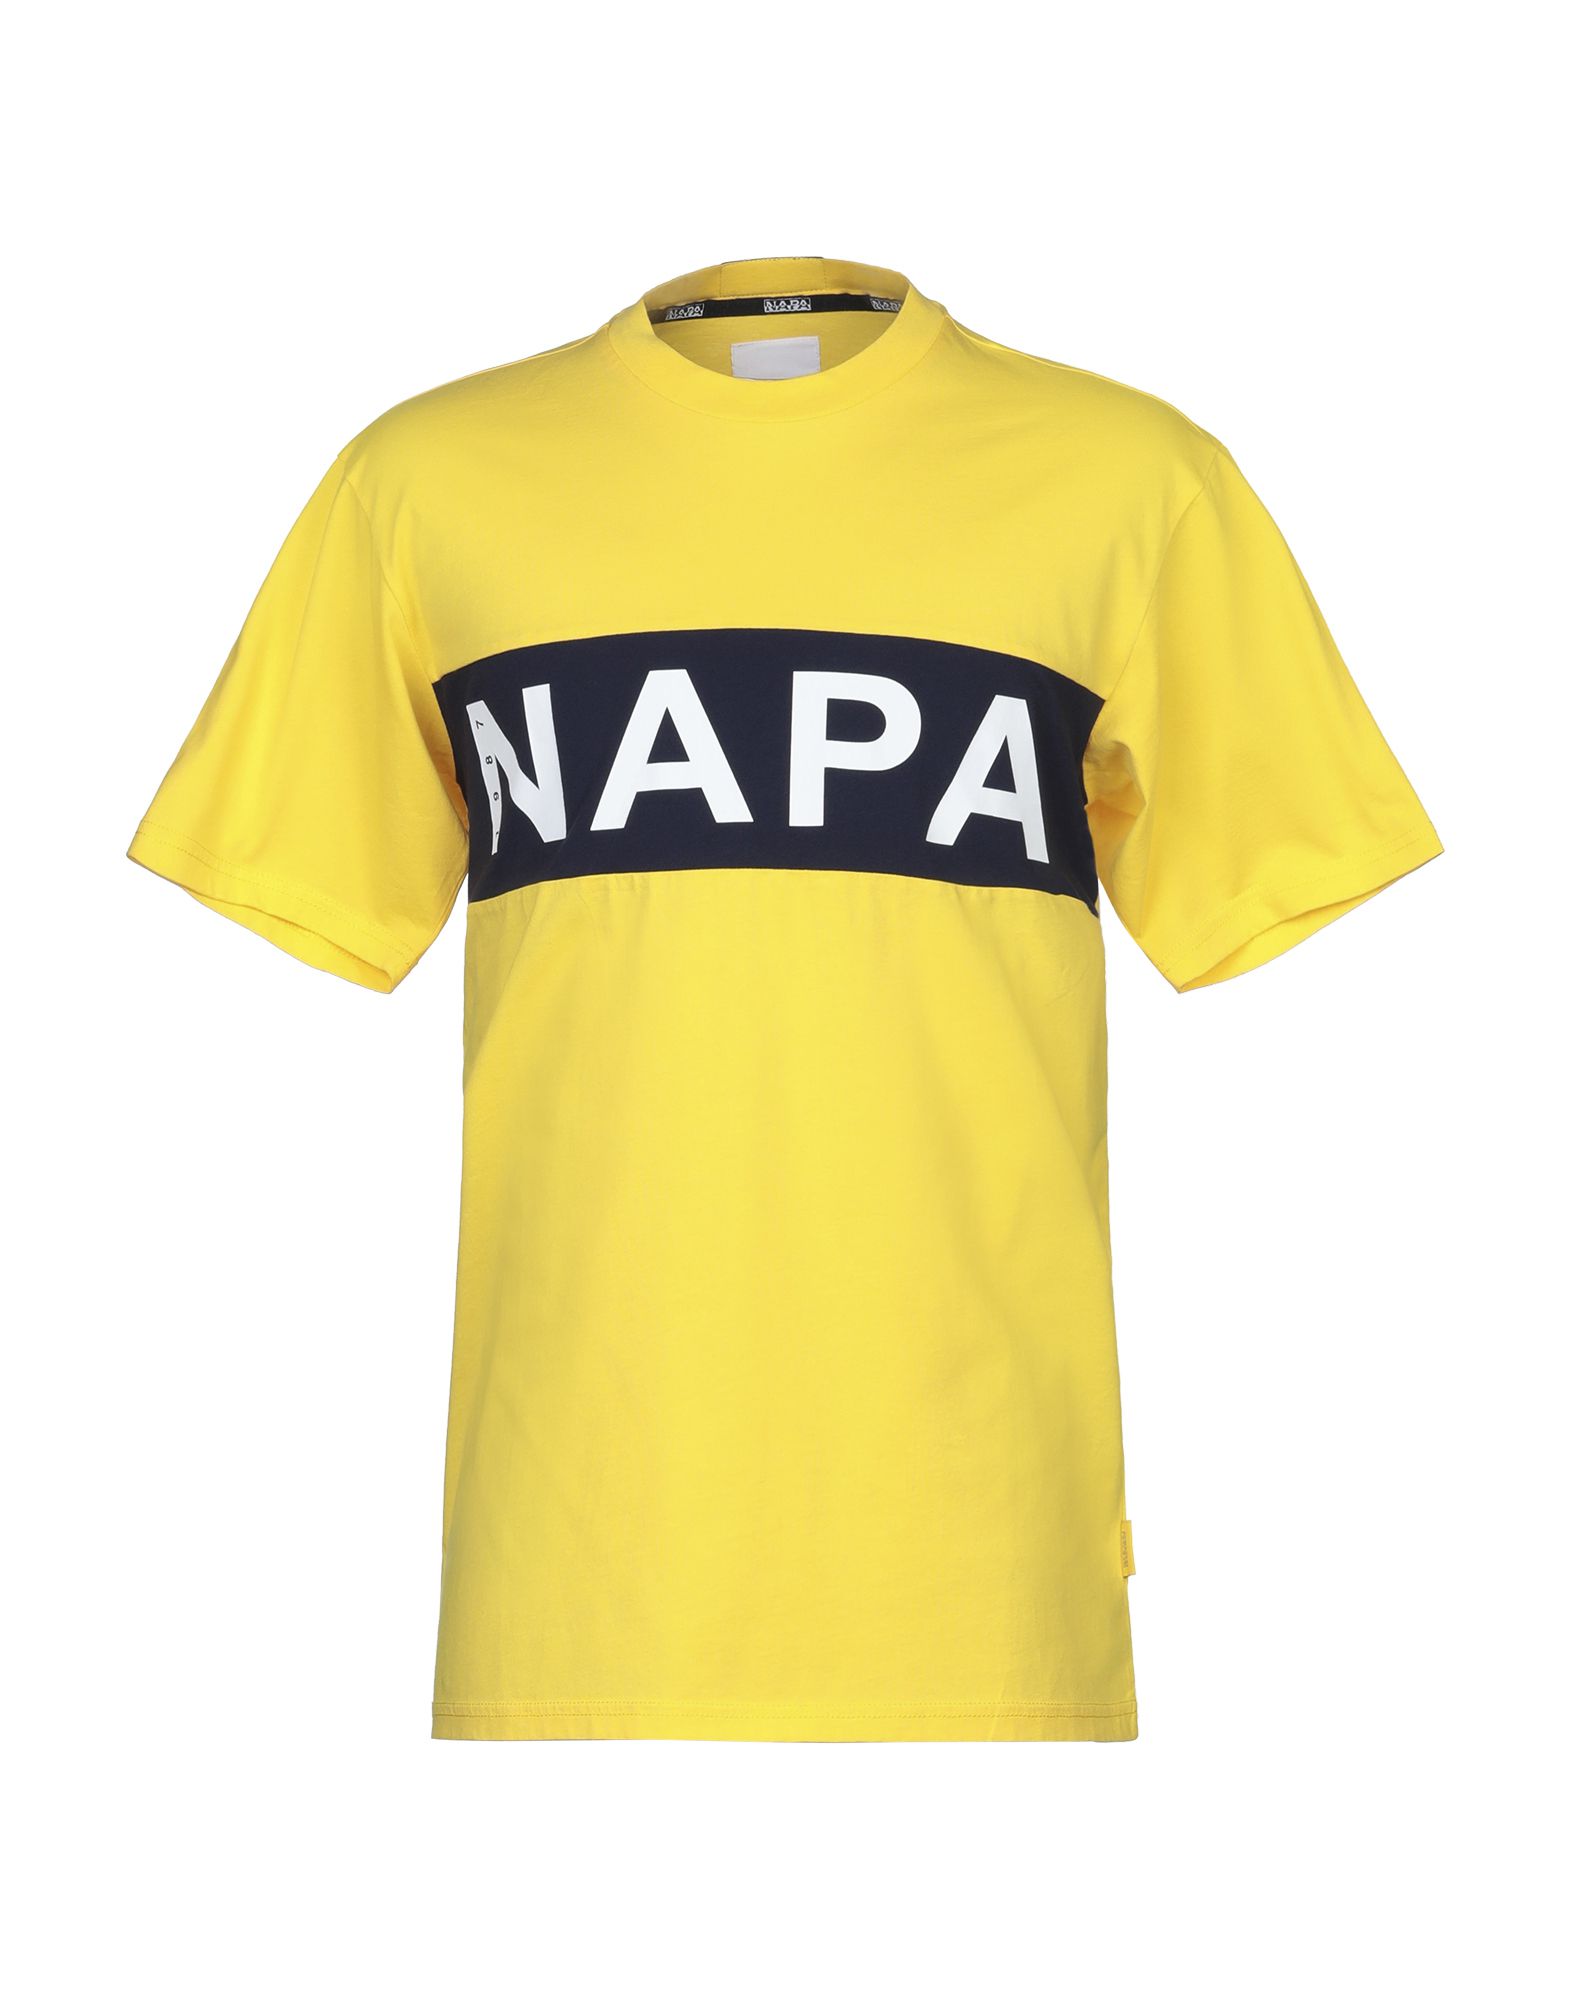 NAPAPIJRI T-shirts Herren Gelb von NAPAPIJRI